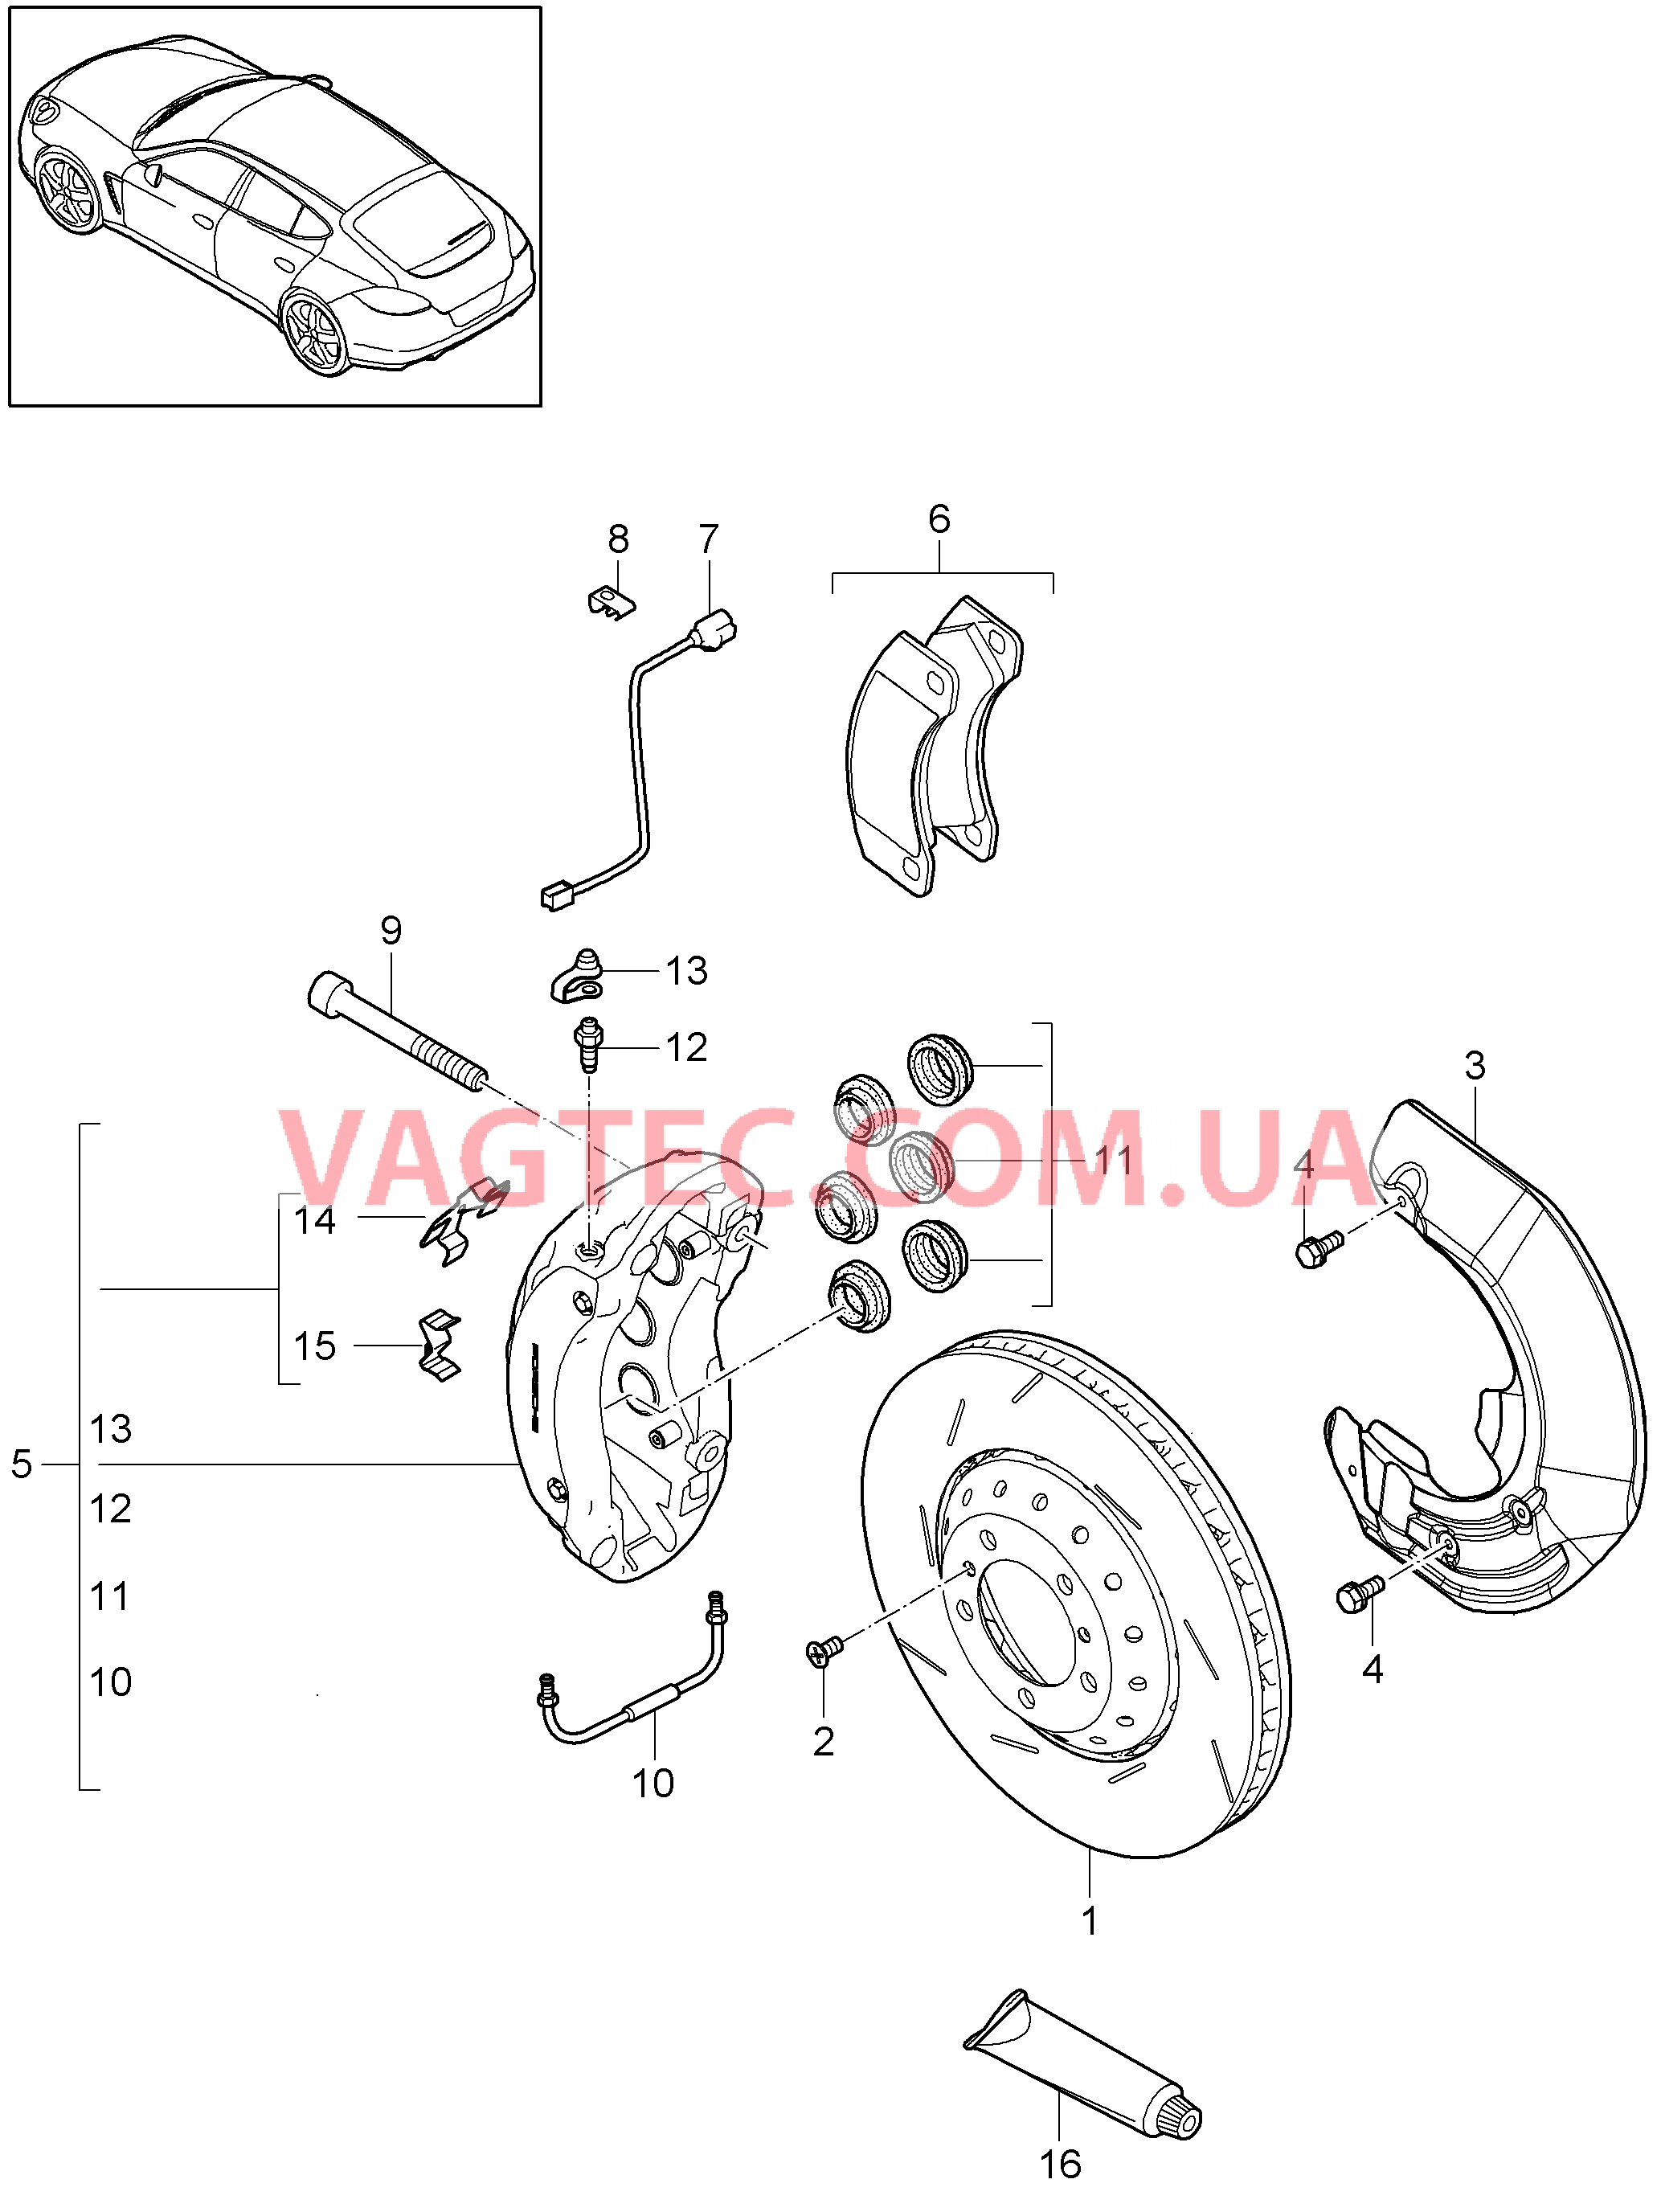 602-010 Дисковой тормоз, Передняя ось
						
						MCR.CB/CC, M46.20/40 для PORSCHE Panamera 2010-2016